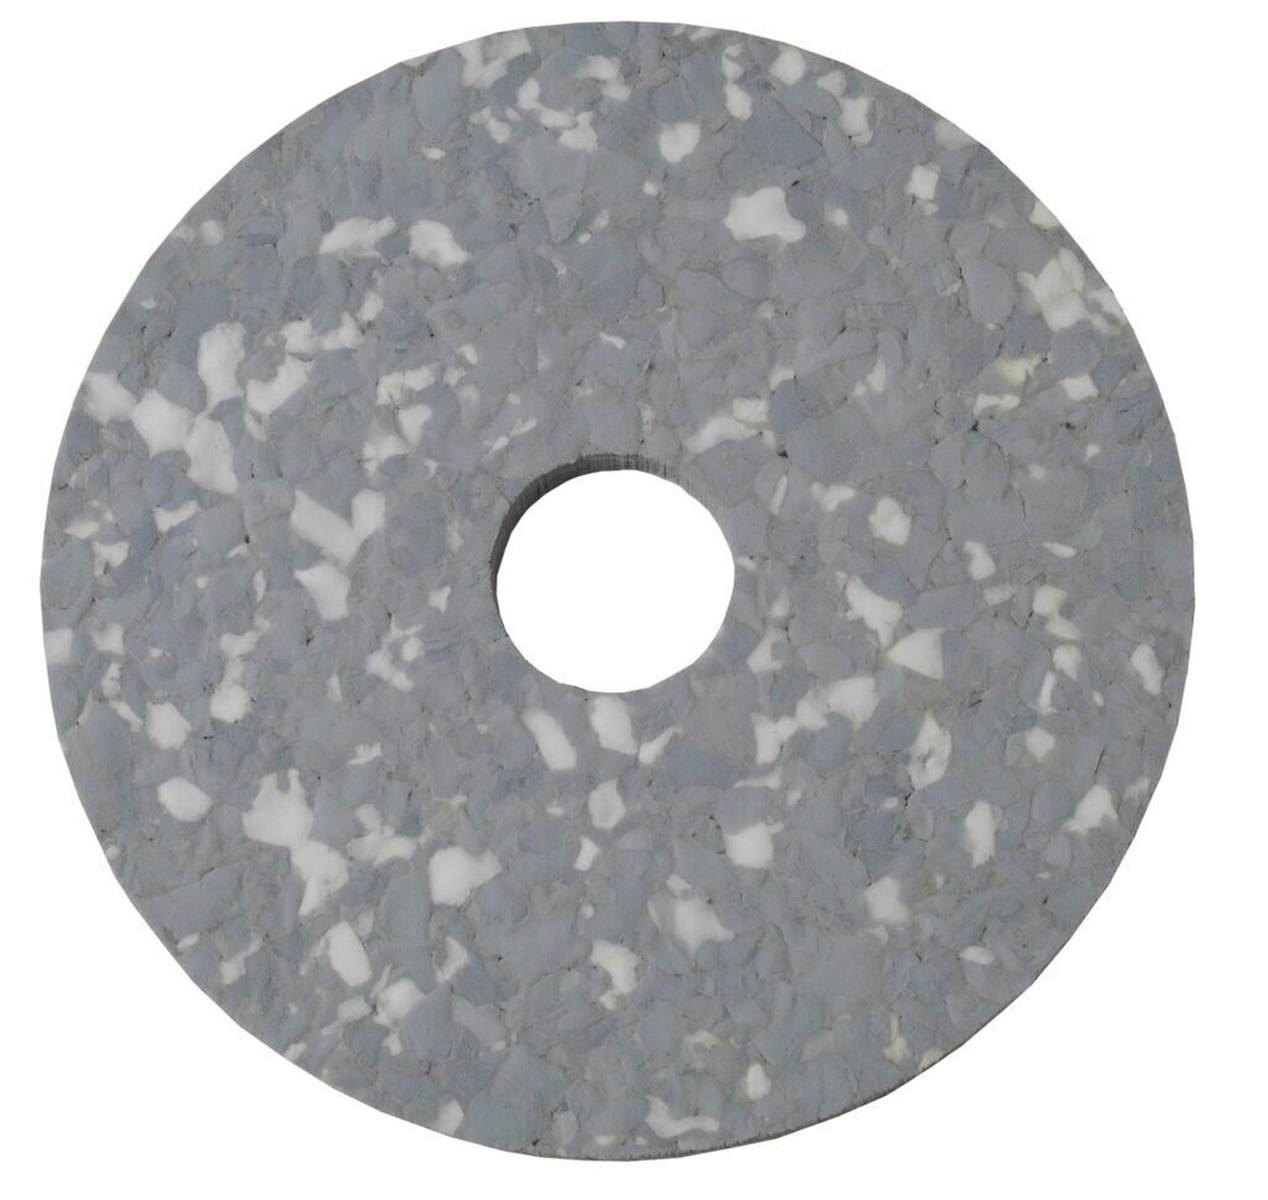 3M Scotch-Brite Melamine machine pad, grey / white, 330 mm